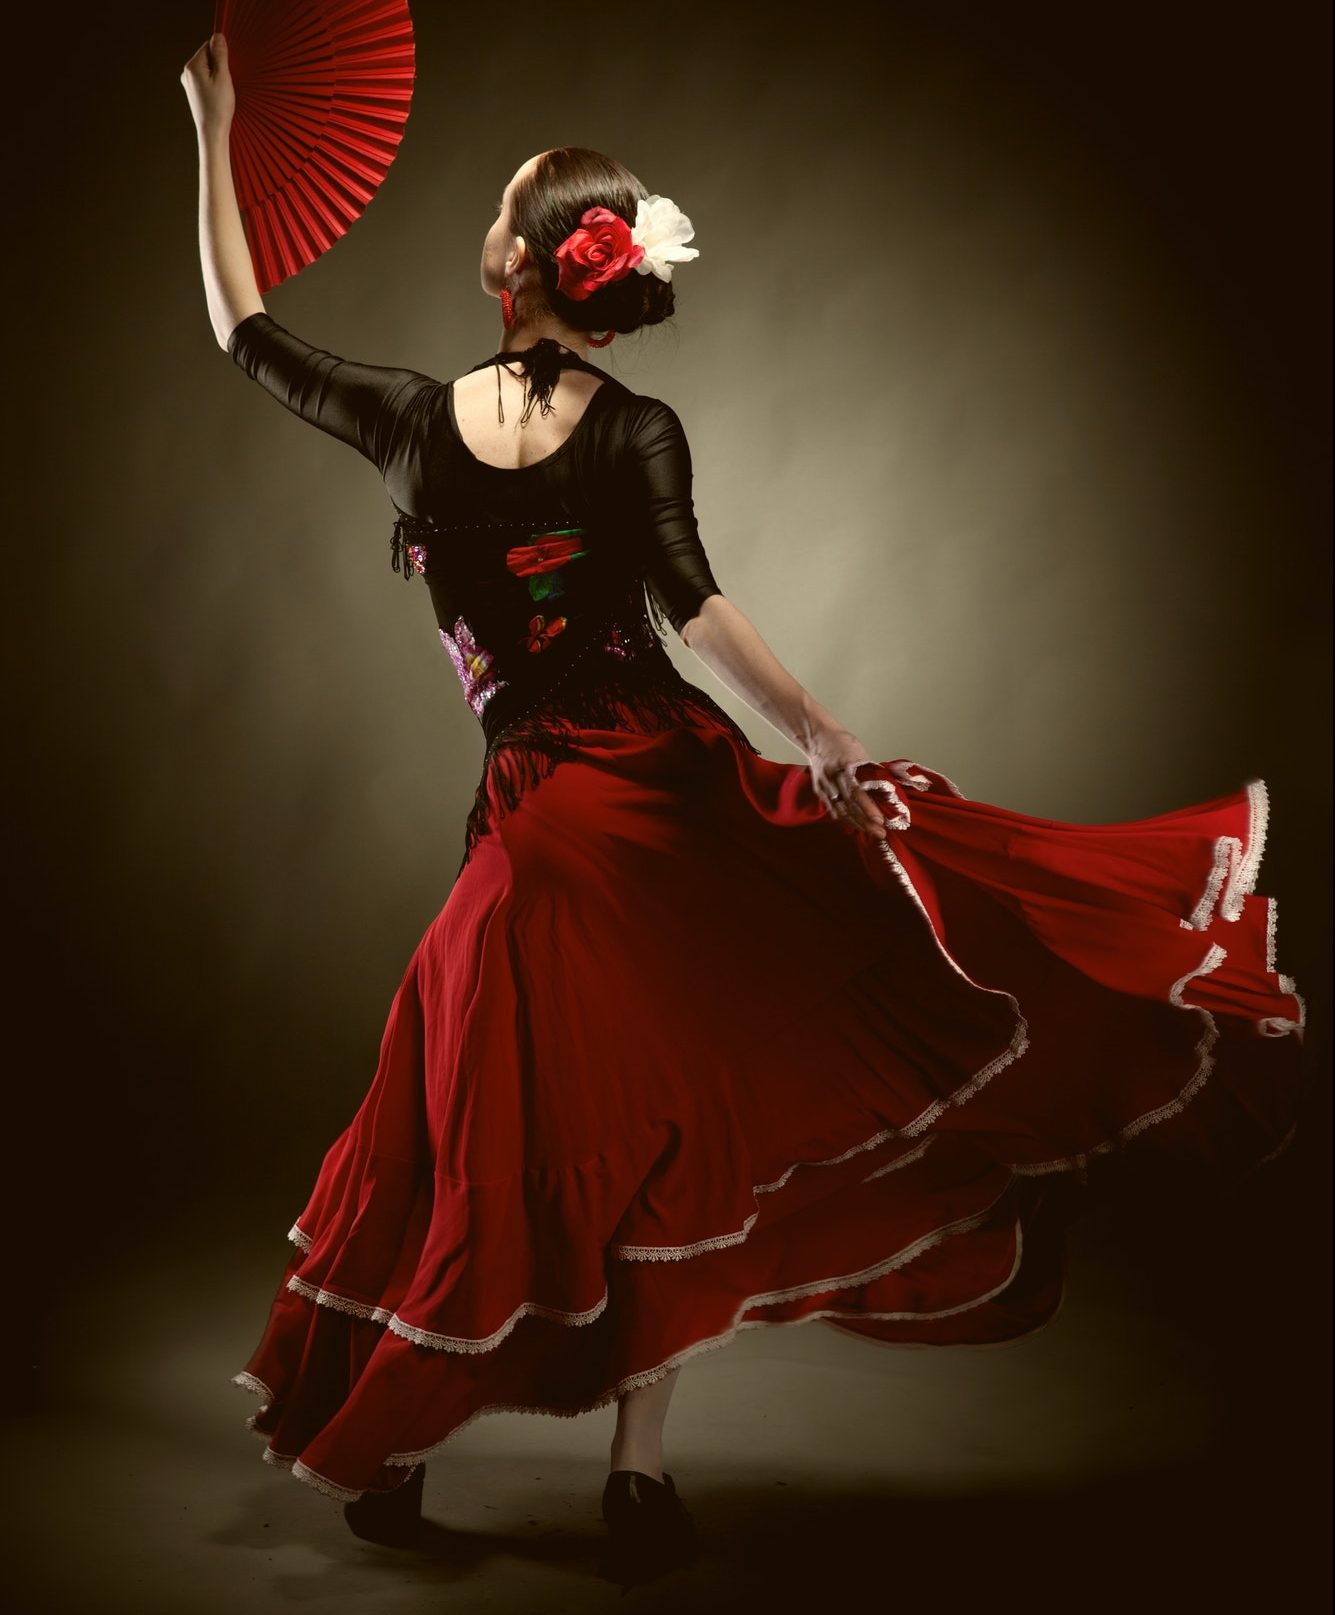 young woman dancing flamenco on black